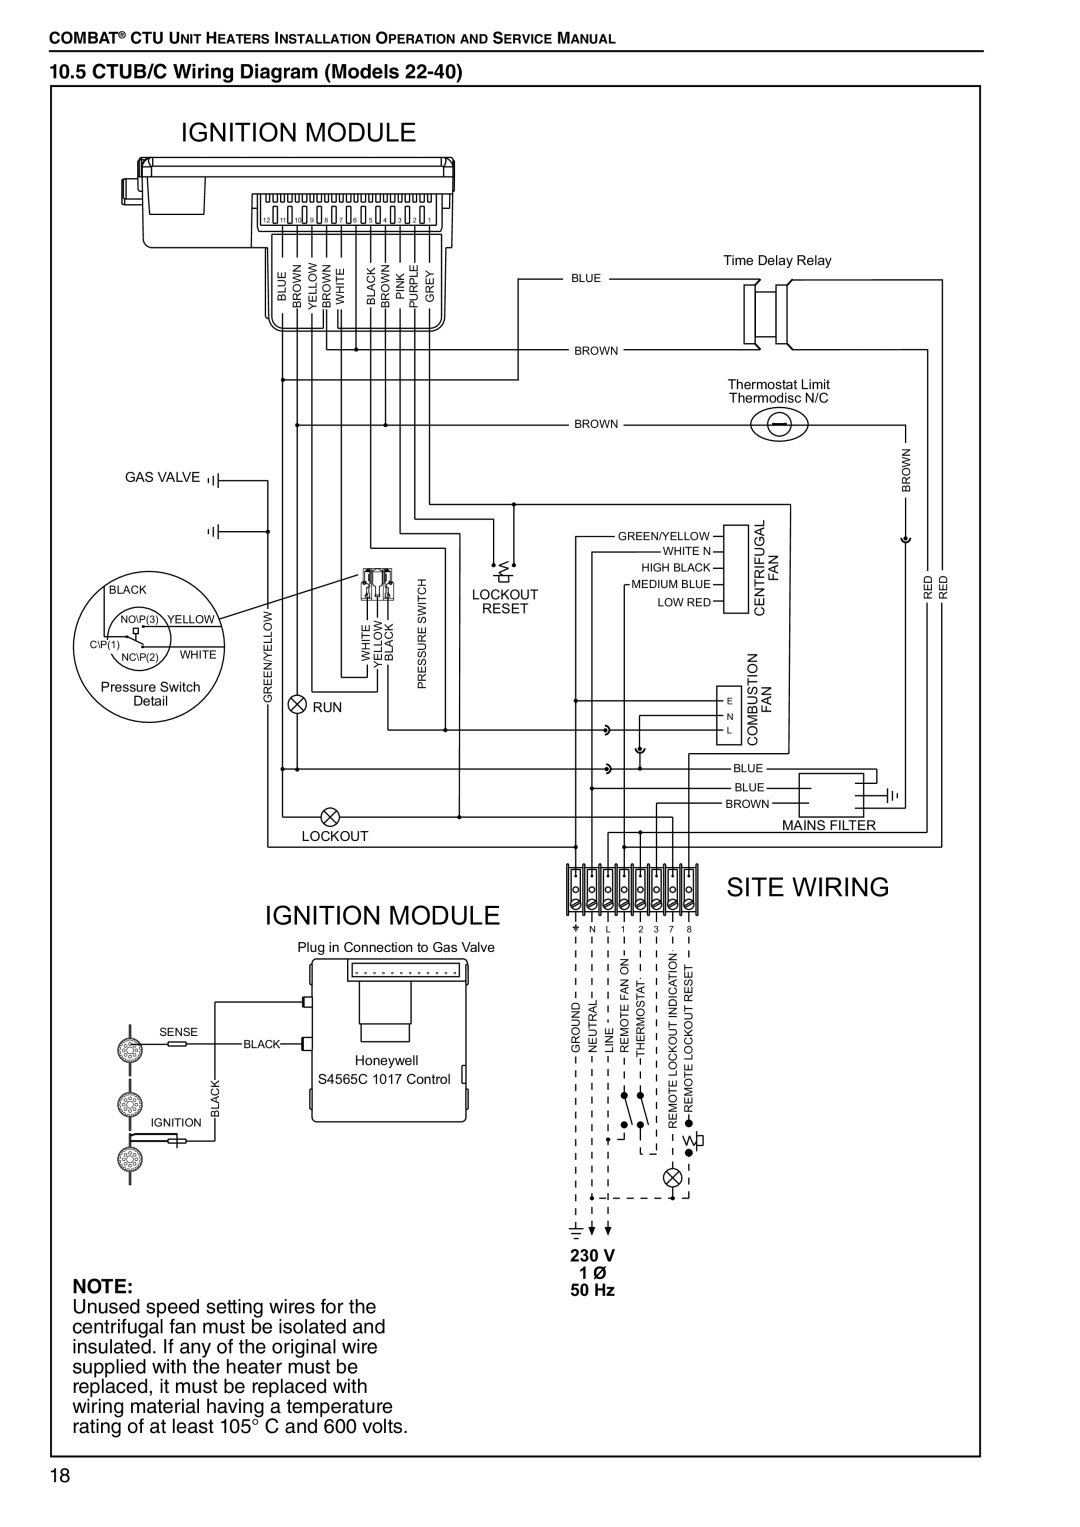 Roberts Gorden CTU 22 TO 115 service manual Site Wiring, CTUB/C Wiring Diagram Models, Ignition Module 